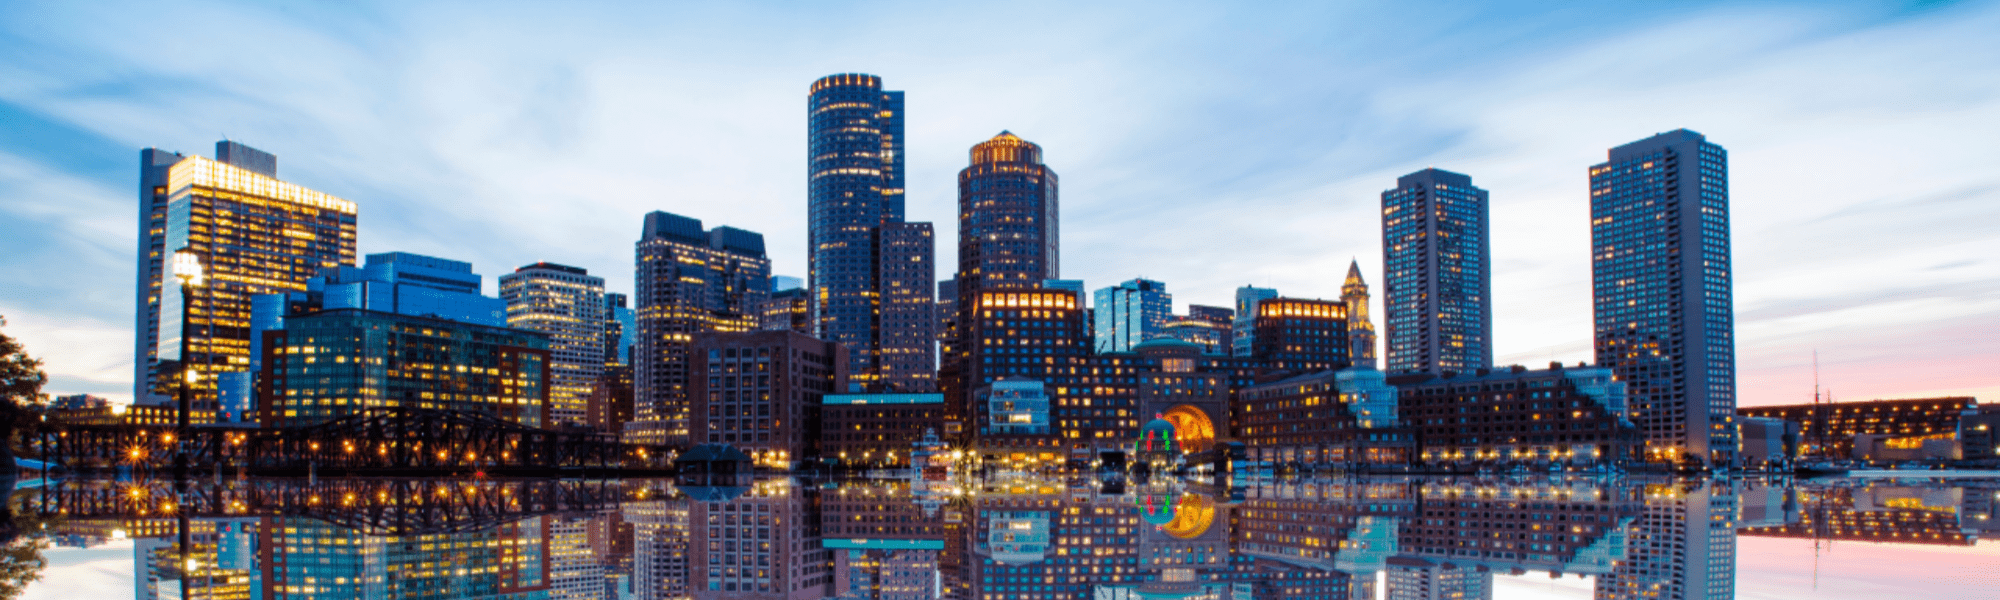 Boston skyline header image